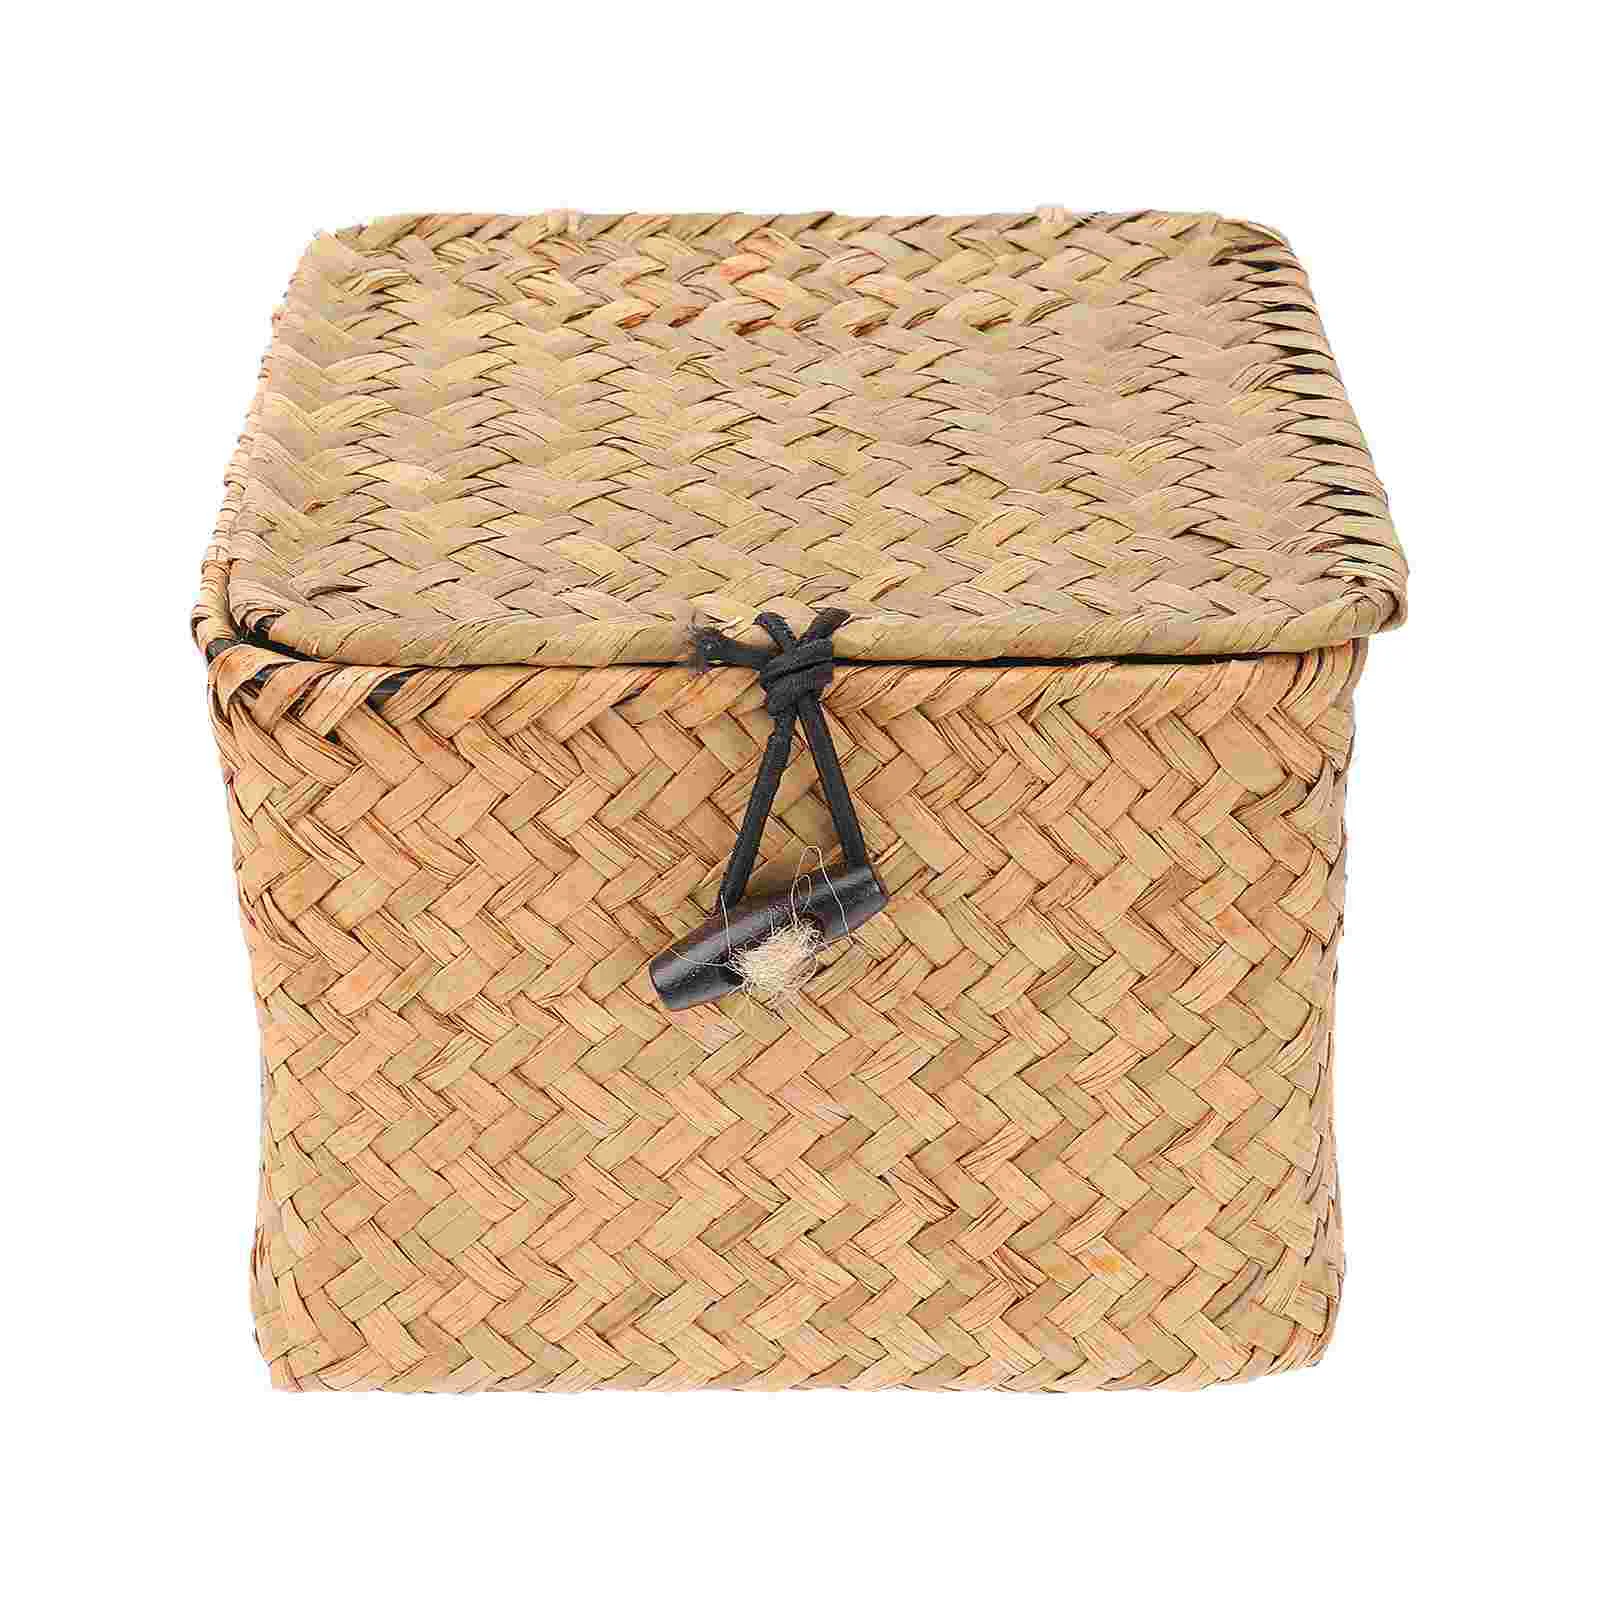 

Basket Storage Boxwoven Straw Wicker Baskets Lid Seagrass Rattan Organizer Lids Tea Bins Seaweed Handwoven Holder Hyacinthmakeup